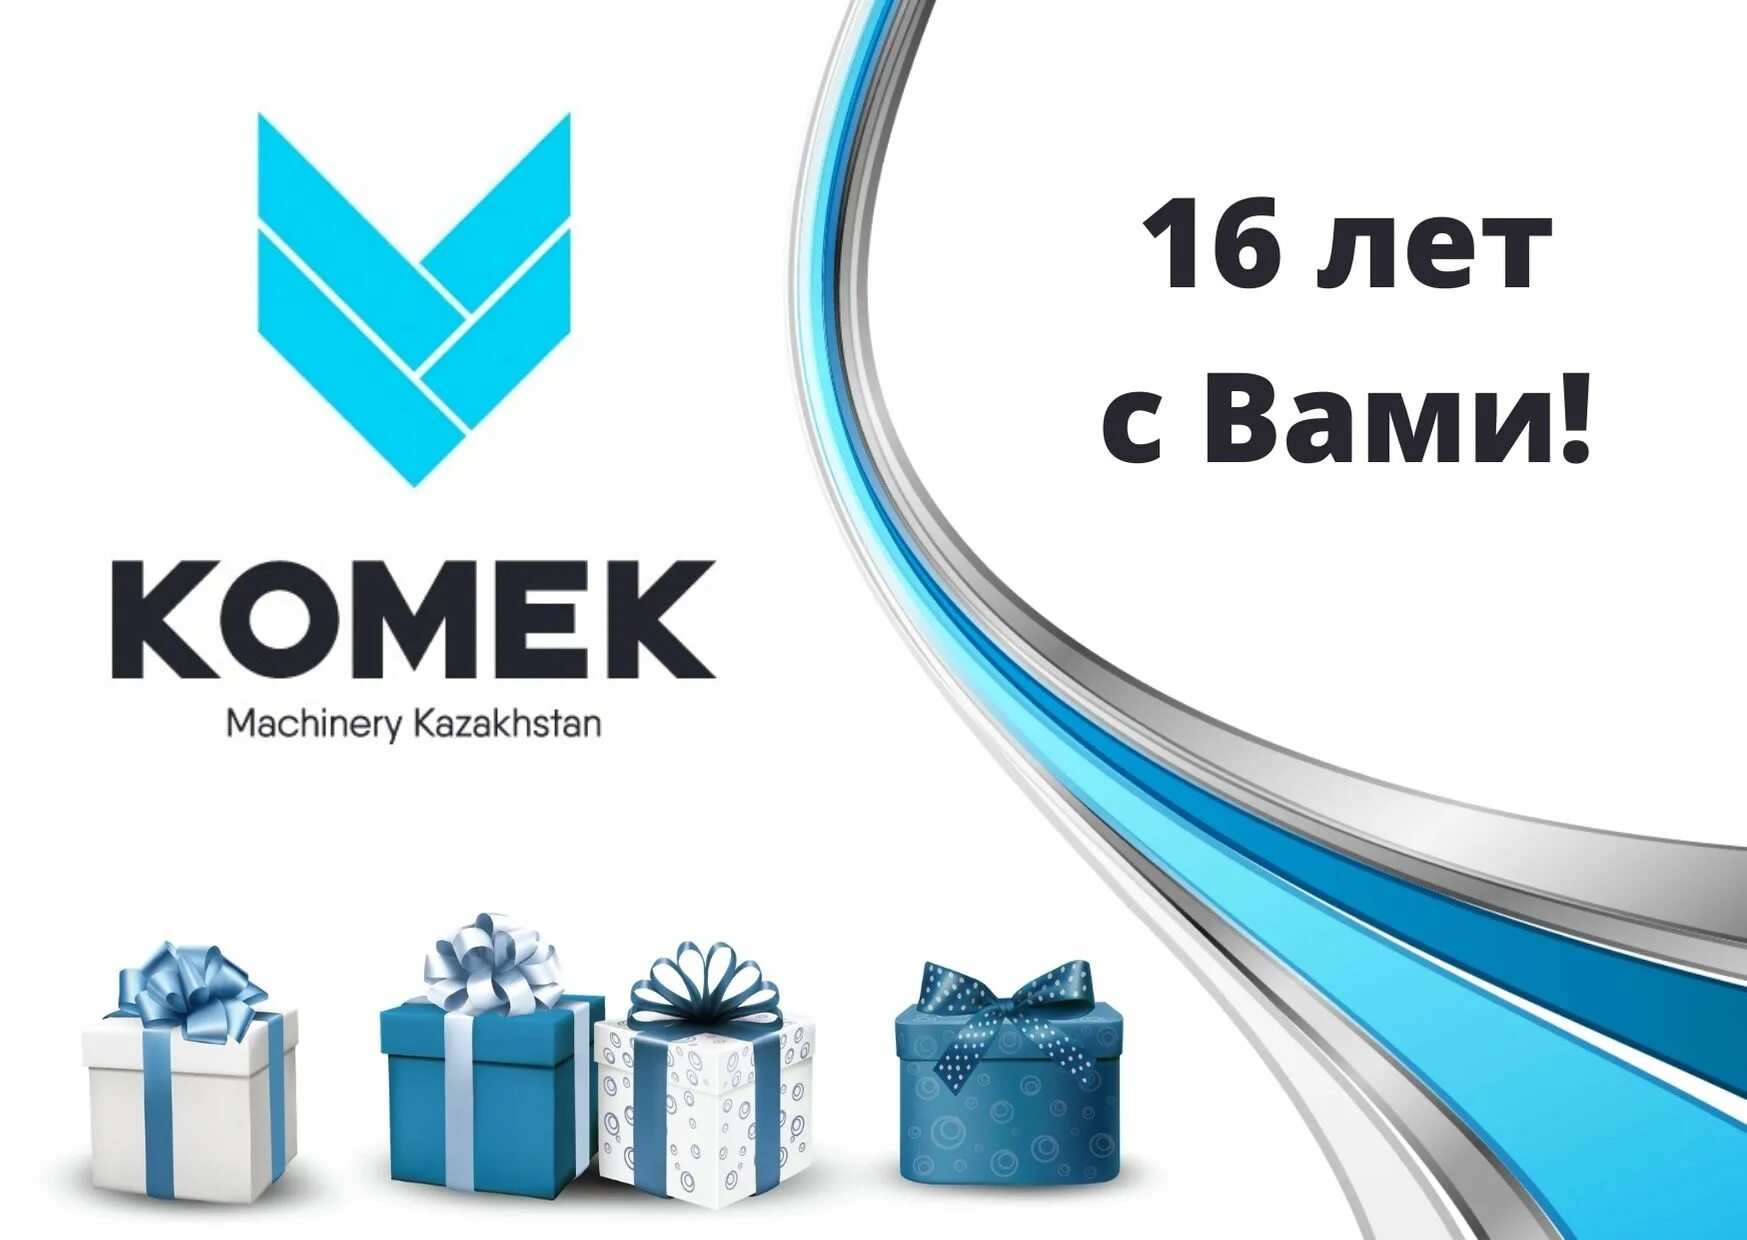 Комек Машинери. Komek Machinery Kazakhstan. Лого комек Машинери. Комек Машинери Екатеринбург.